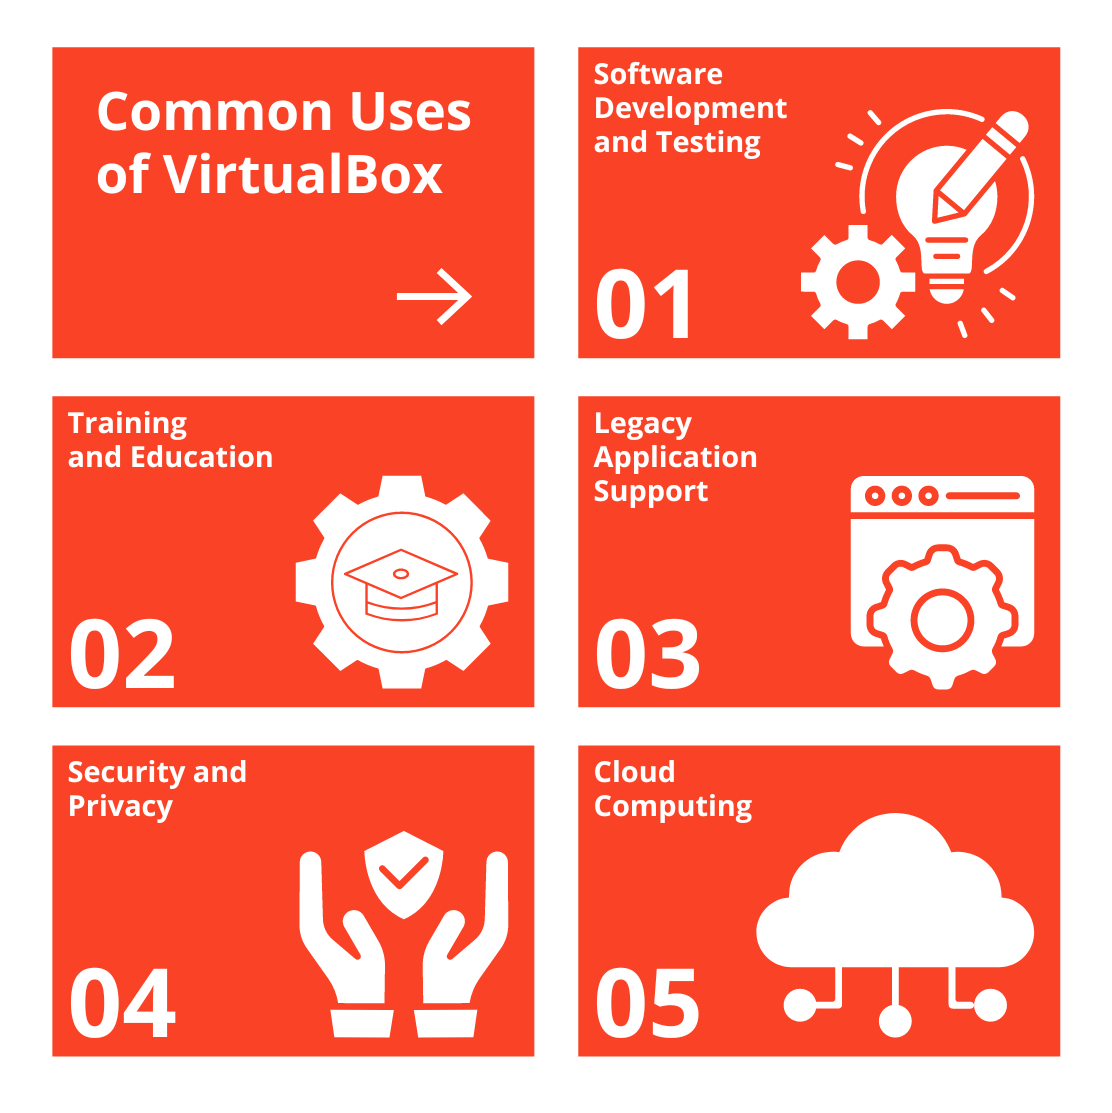 Common Uses of VirtualBox